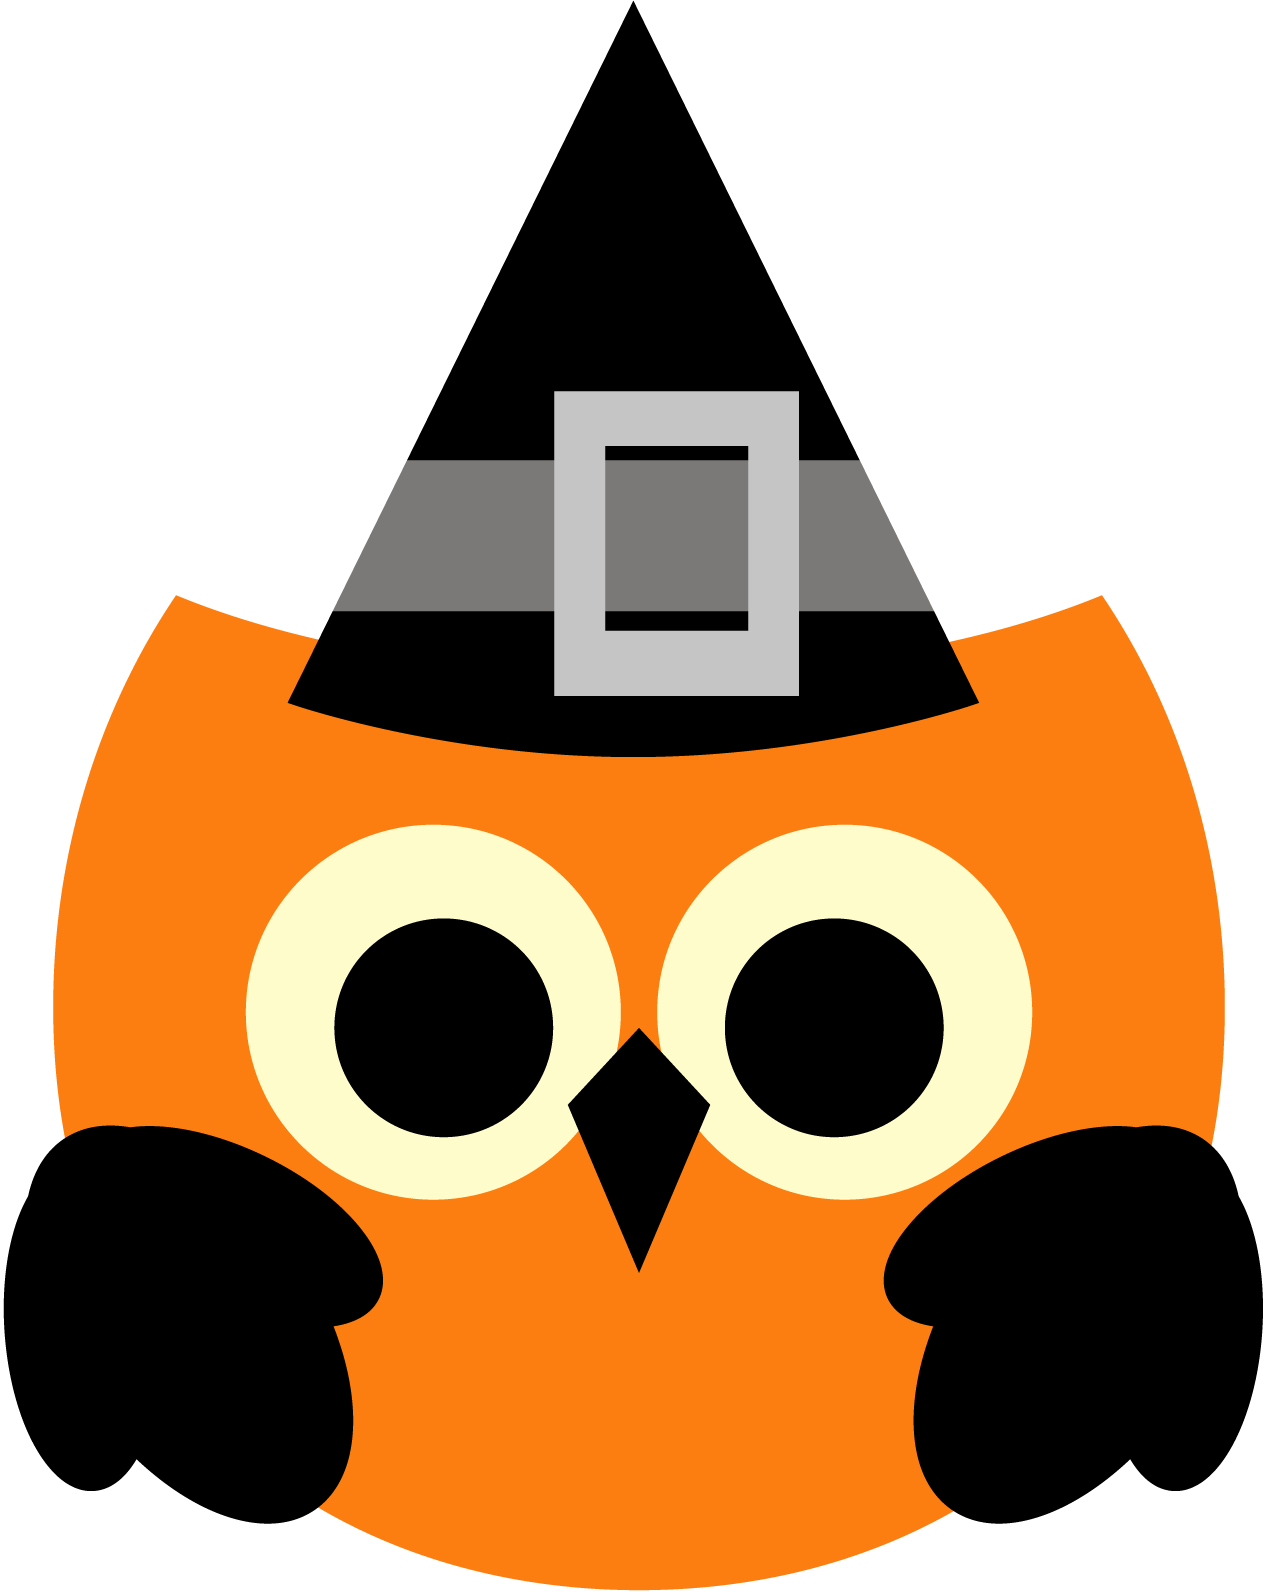 Cute owl construction clipart - ClipartFox